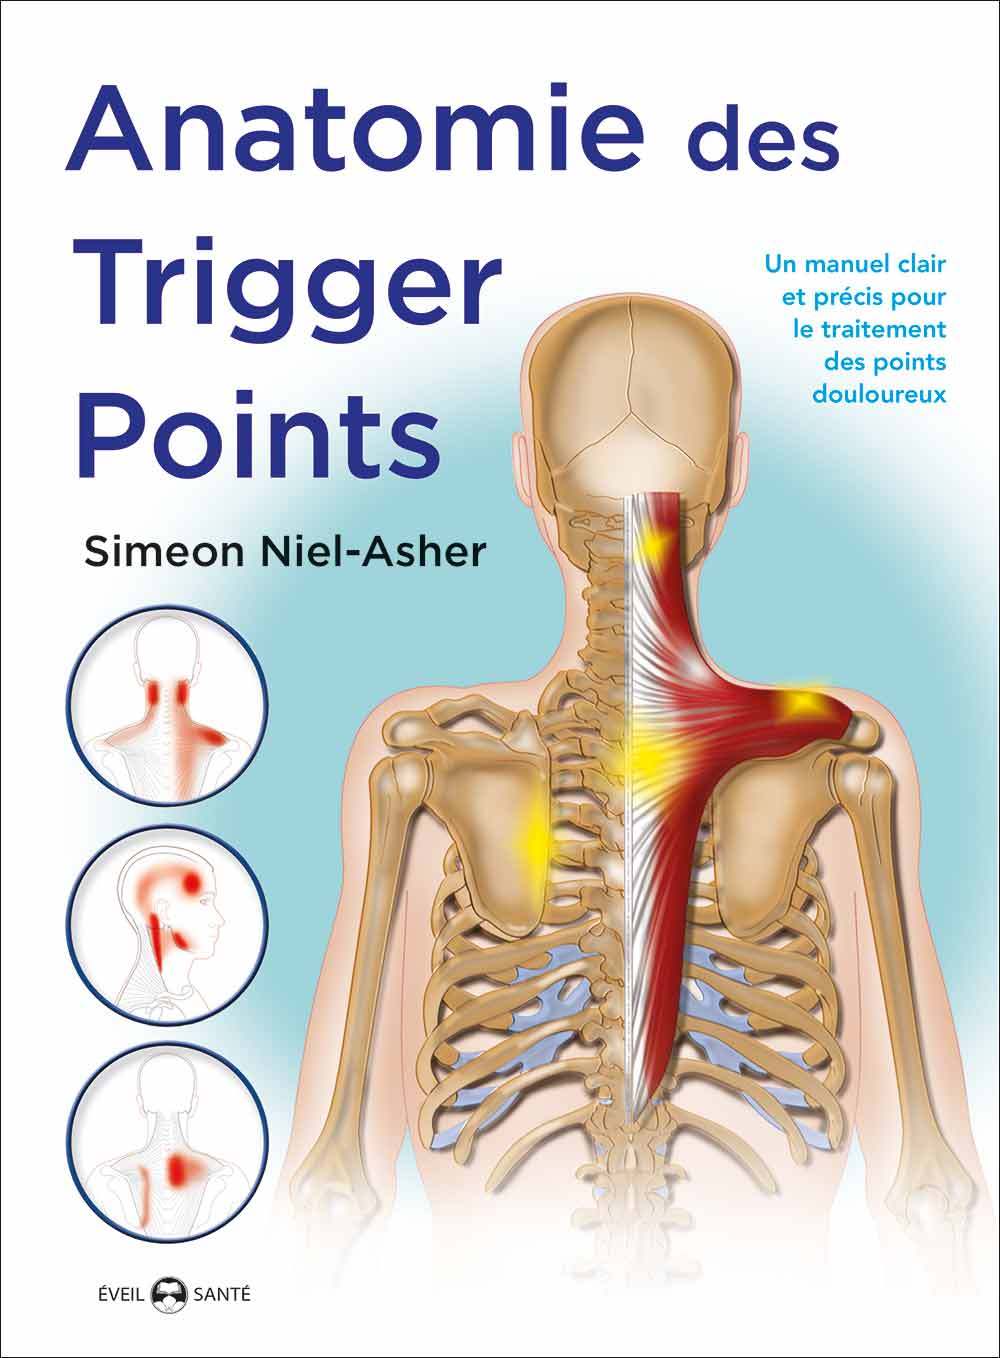 Knjiga Anatomie des trigger points NIEL-ASHER